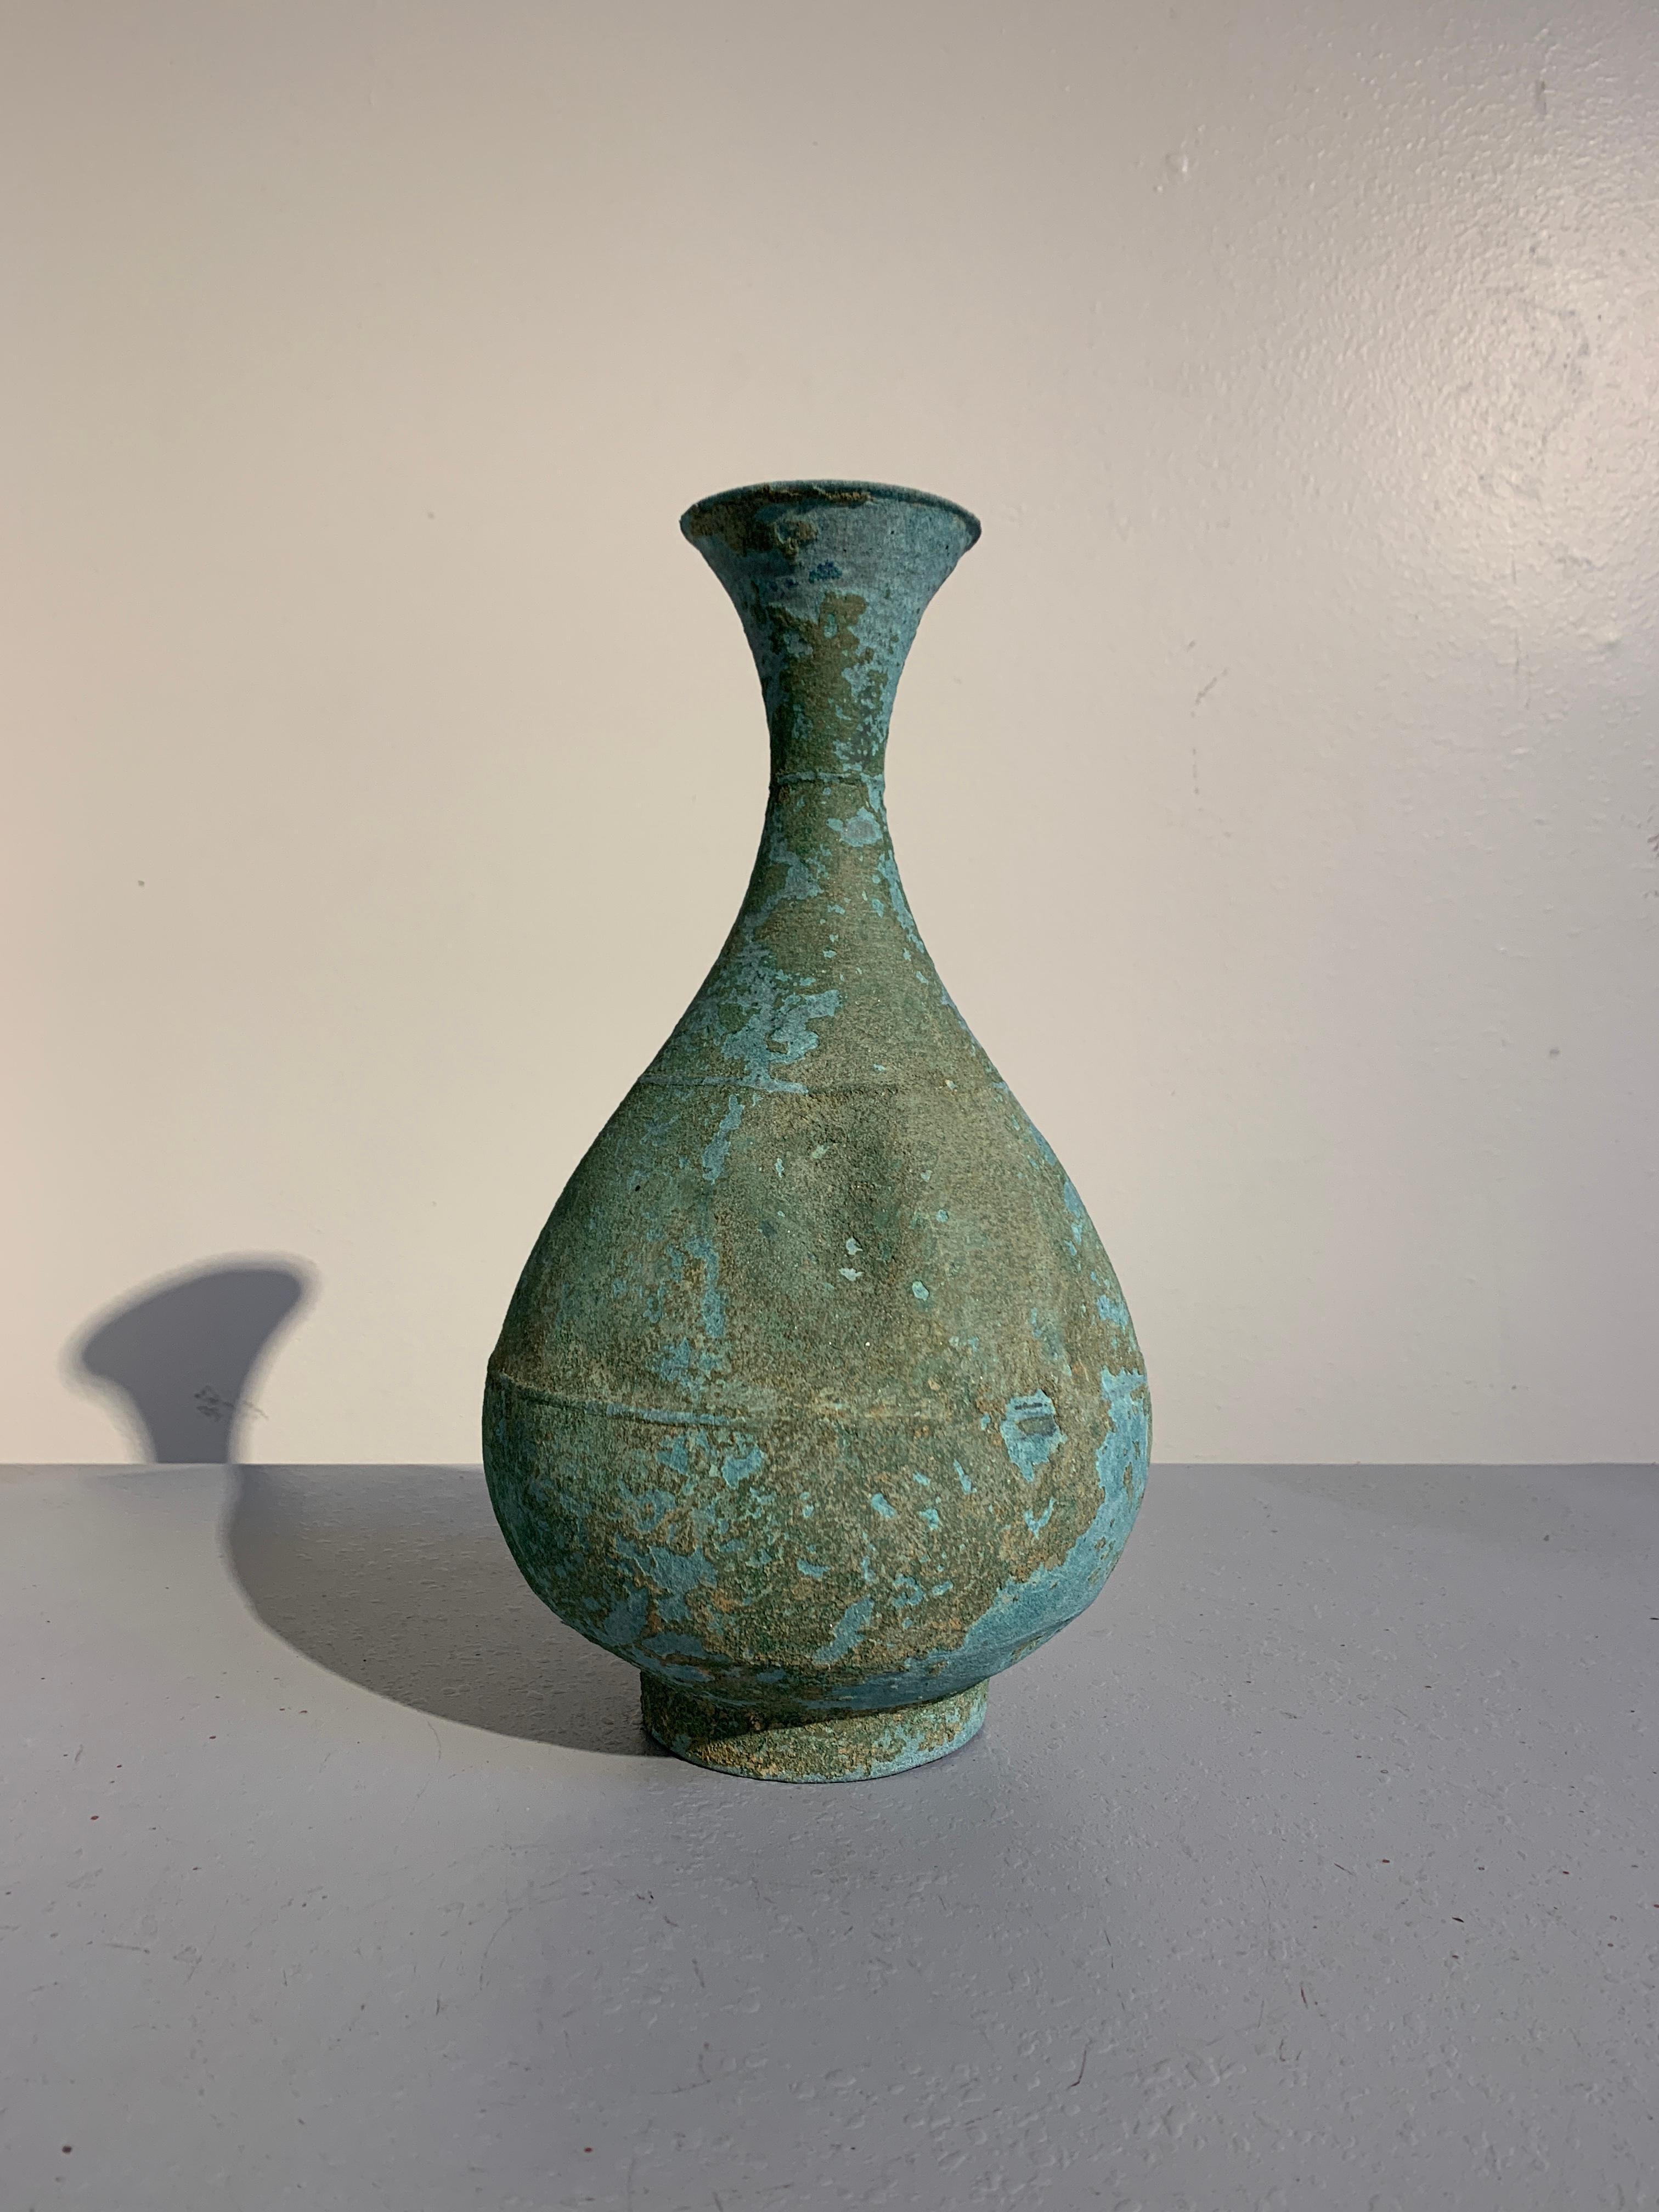 Cast Korean Bronze Vase with Blue Green Patina, Goryeo Dynasty, 13th Century